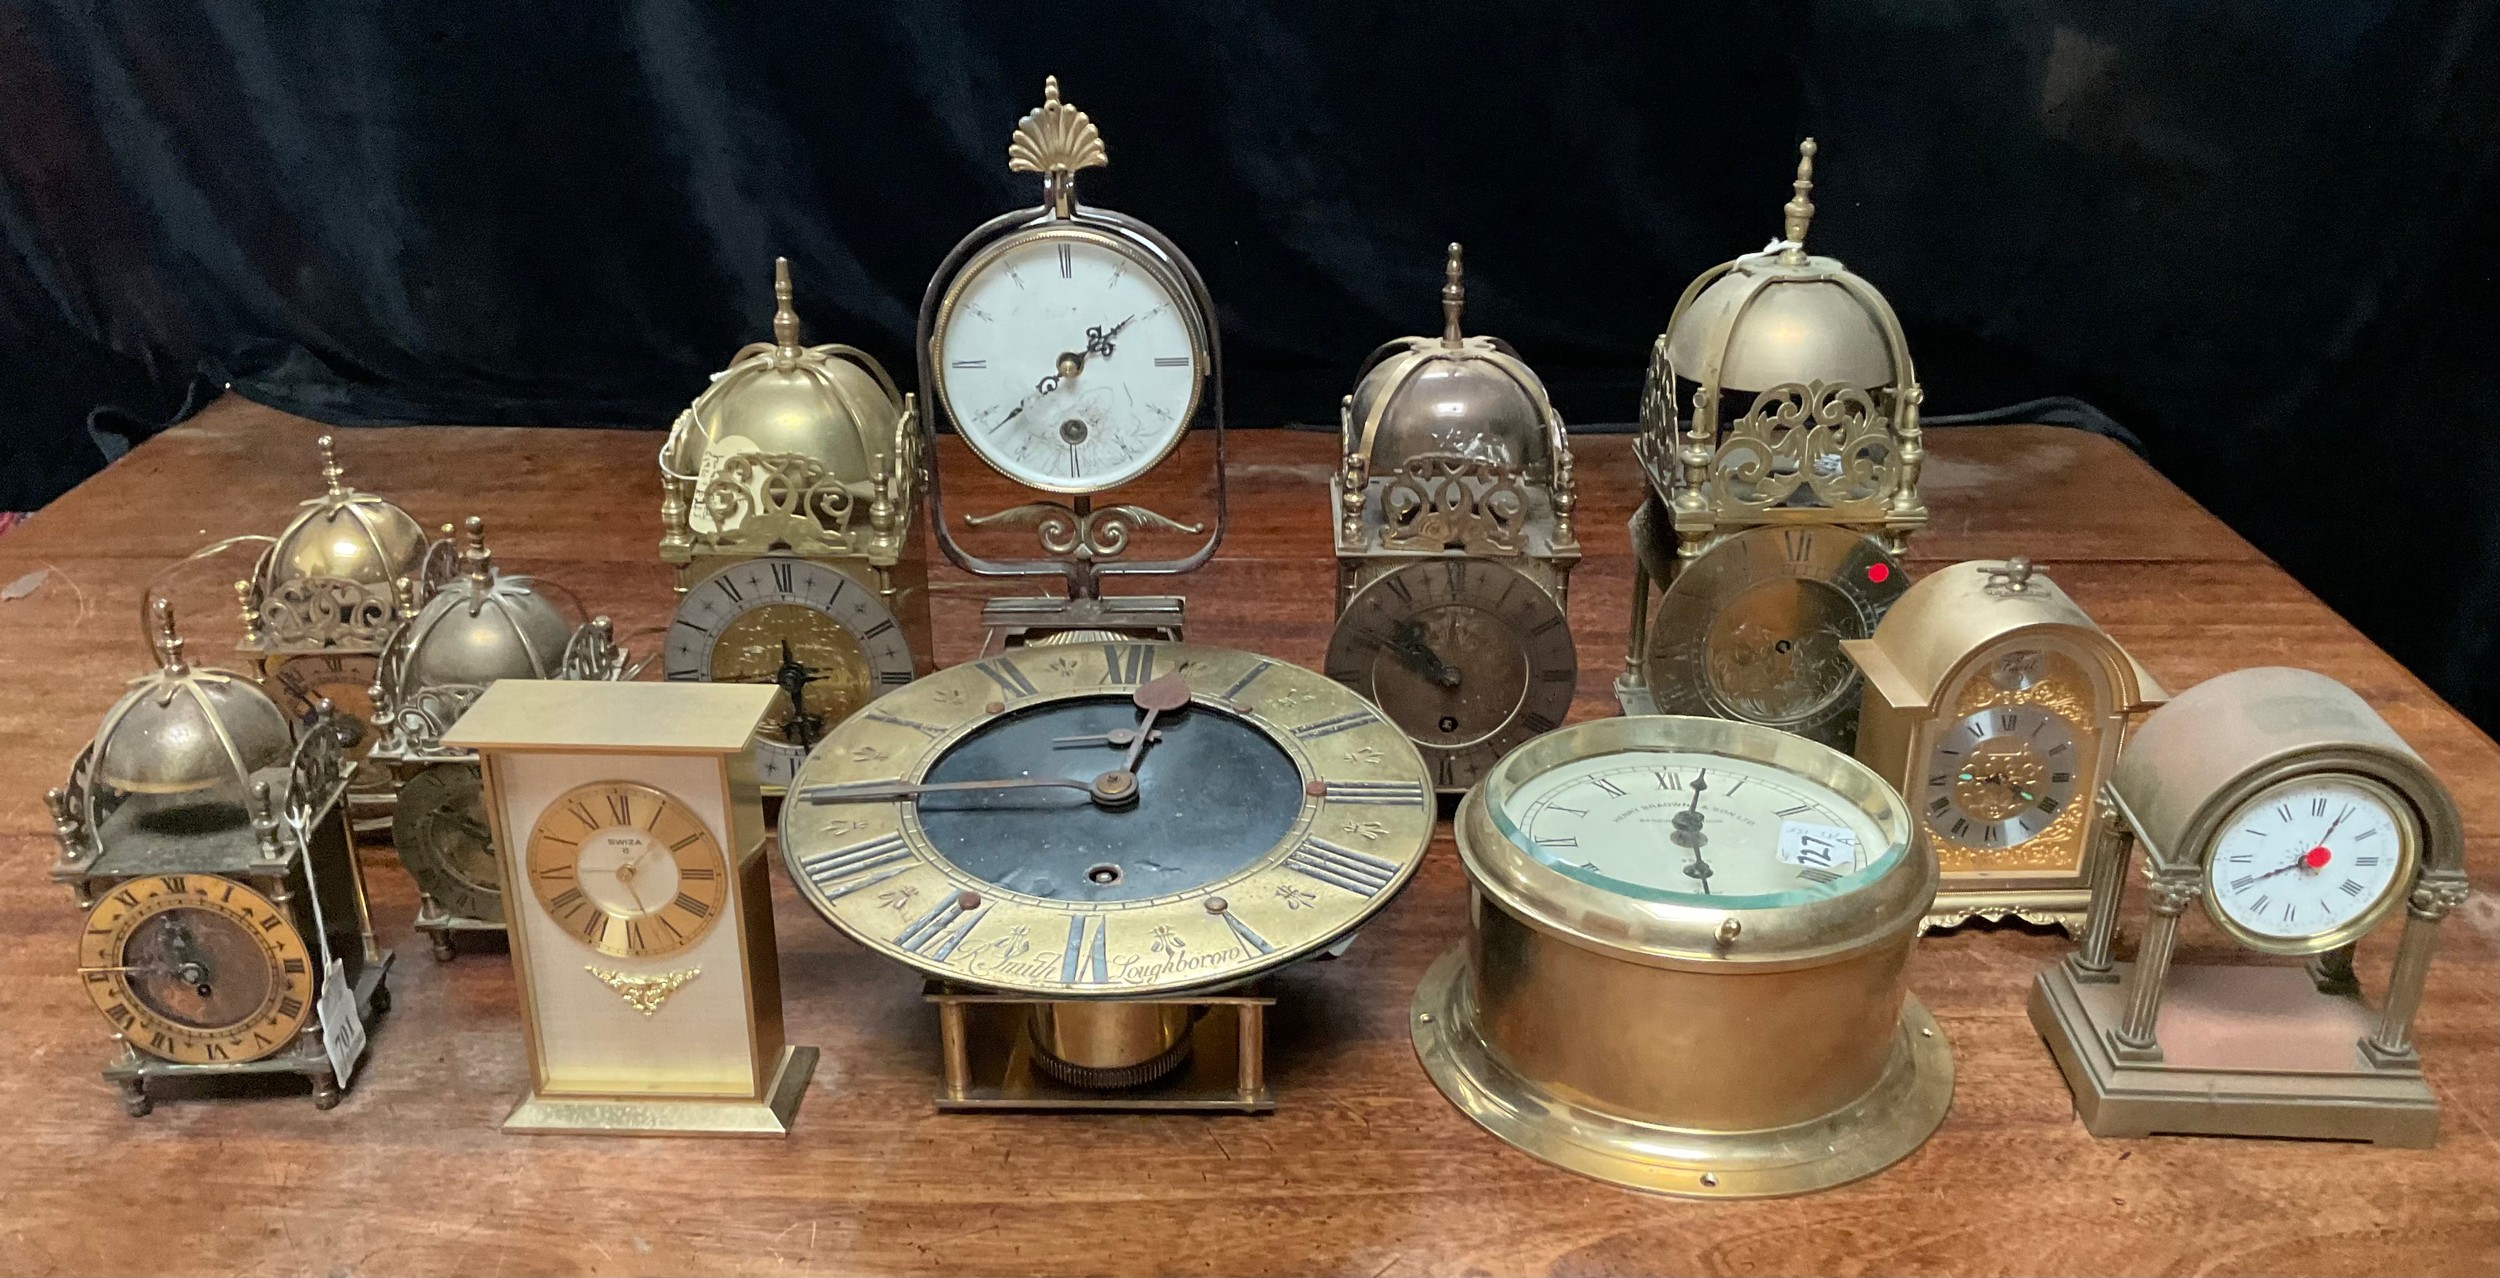 Clocks - 17th century style lantern clocks; a marine timepiece; an 18th century style hook and spike